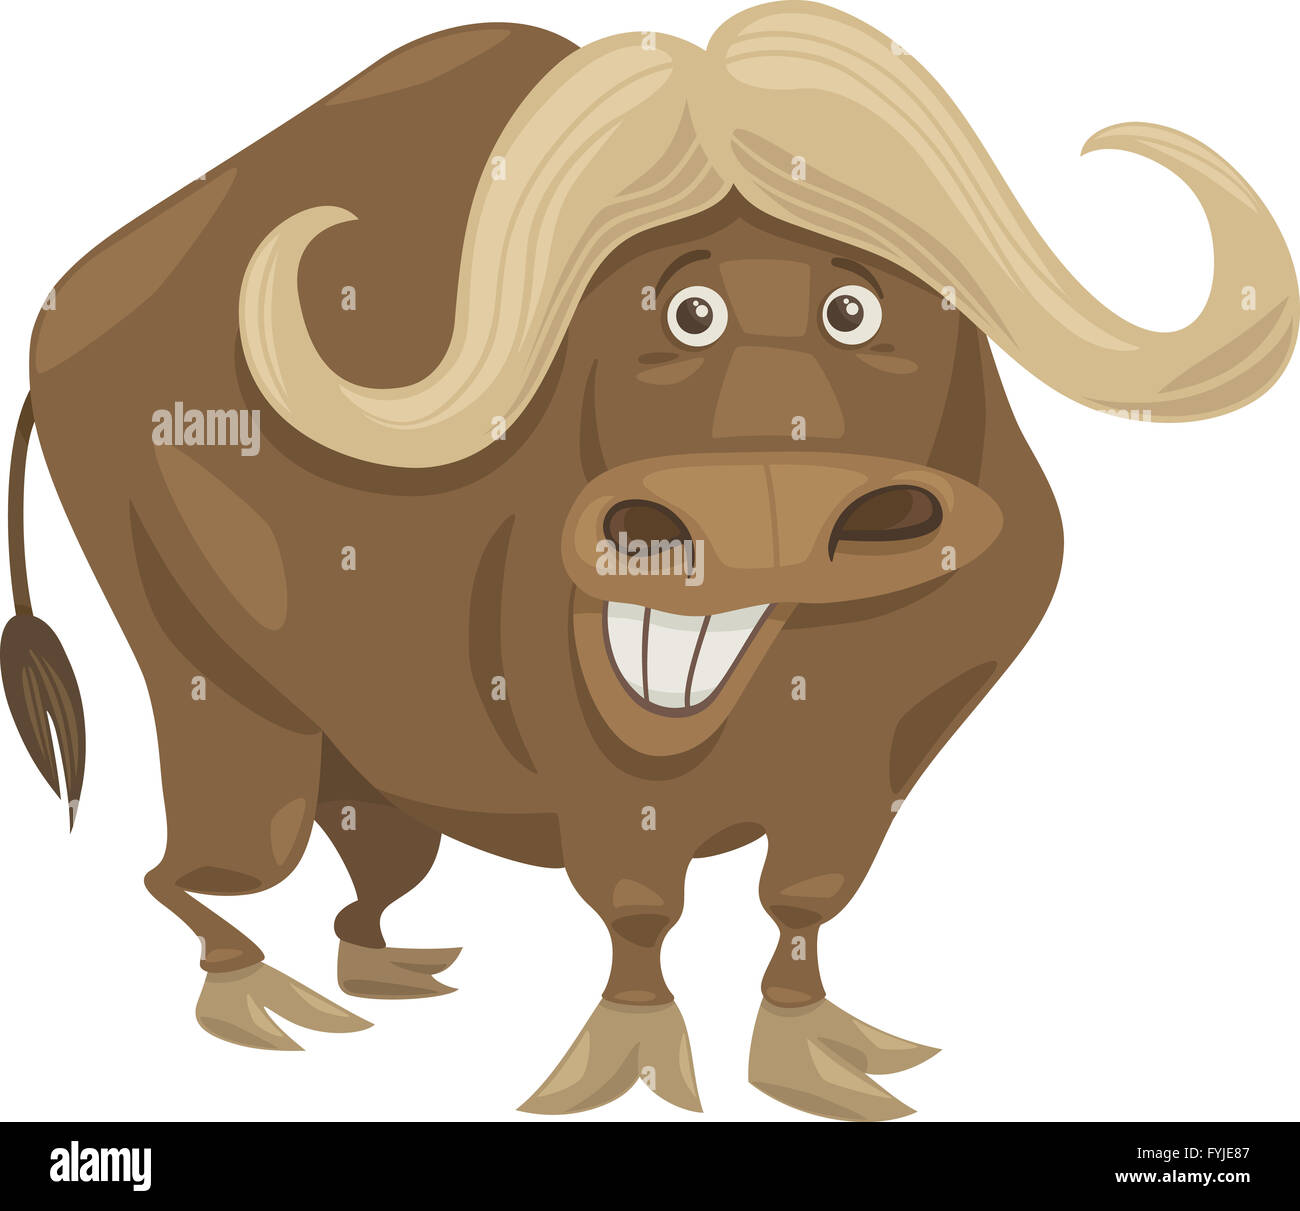 african buffalo cartoon illustration Stock Photo - Alamy